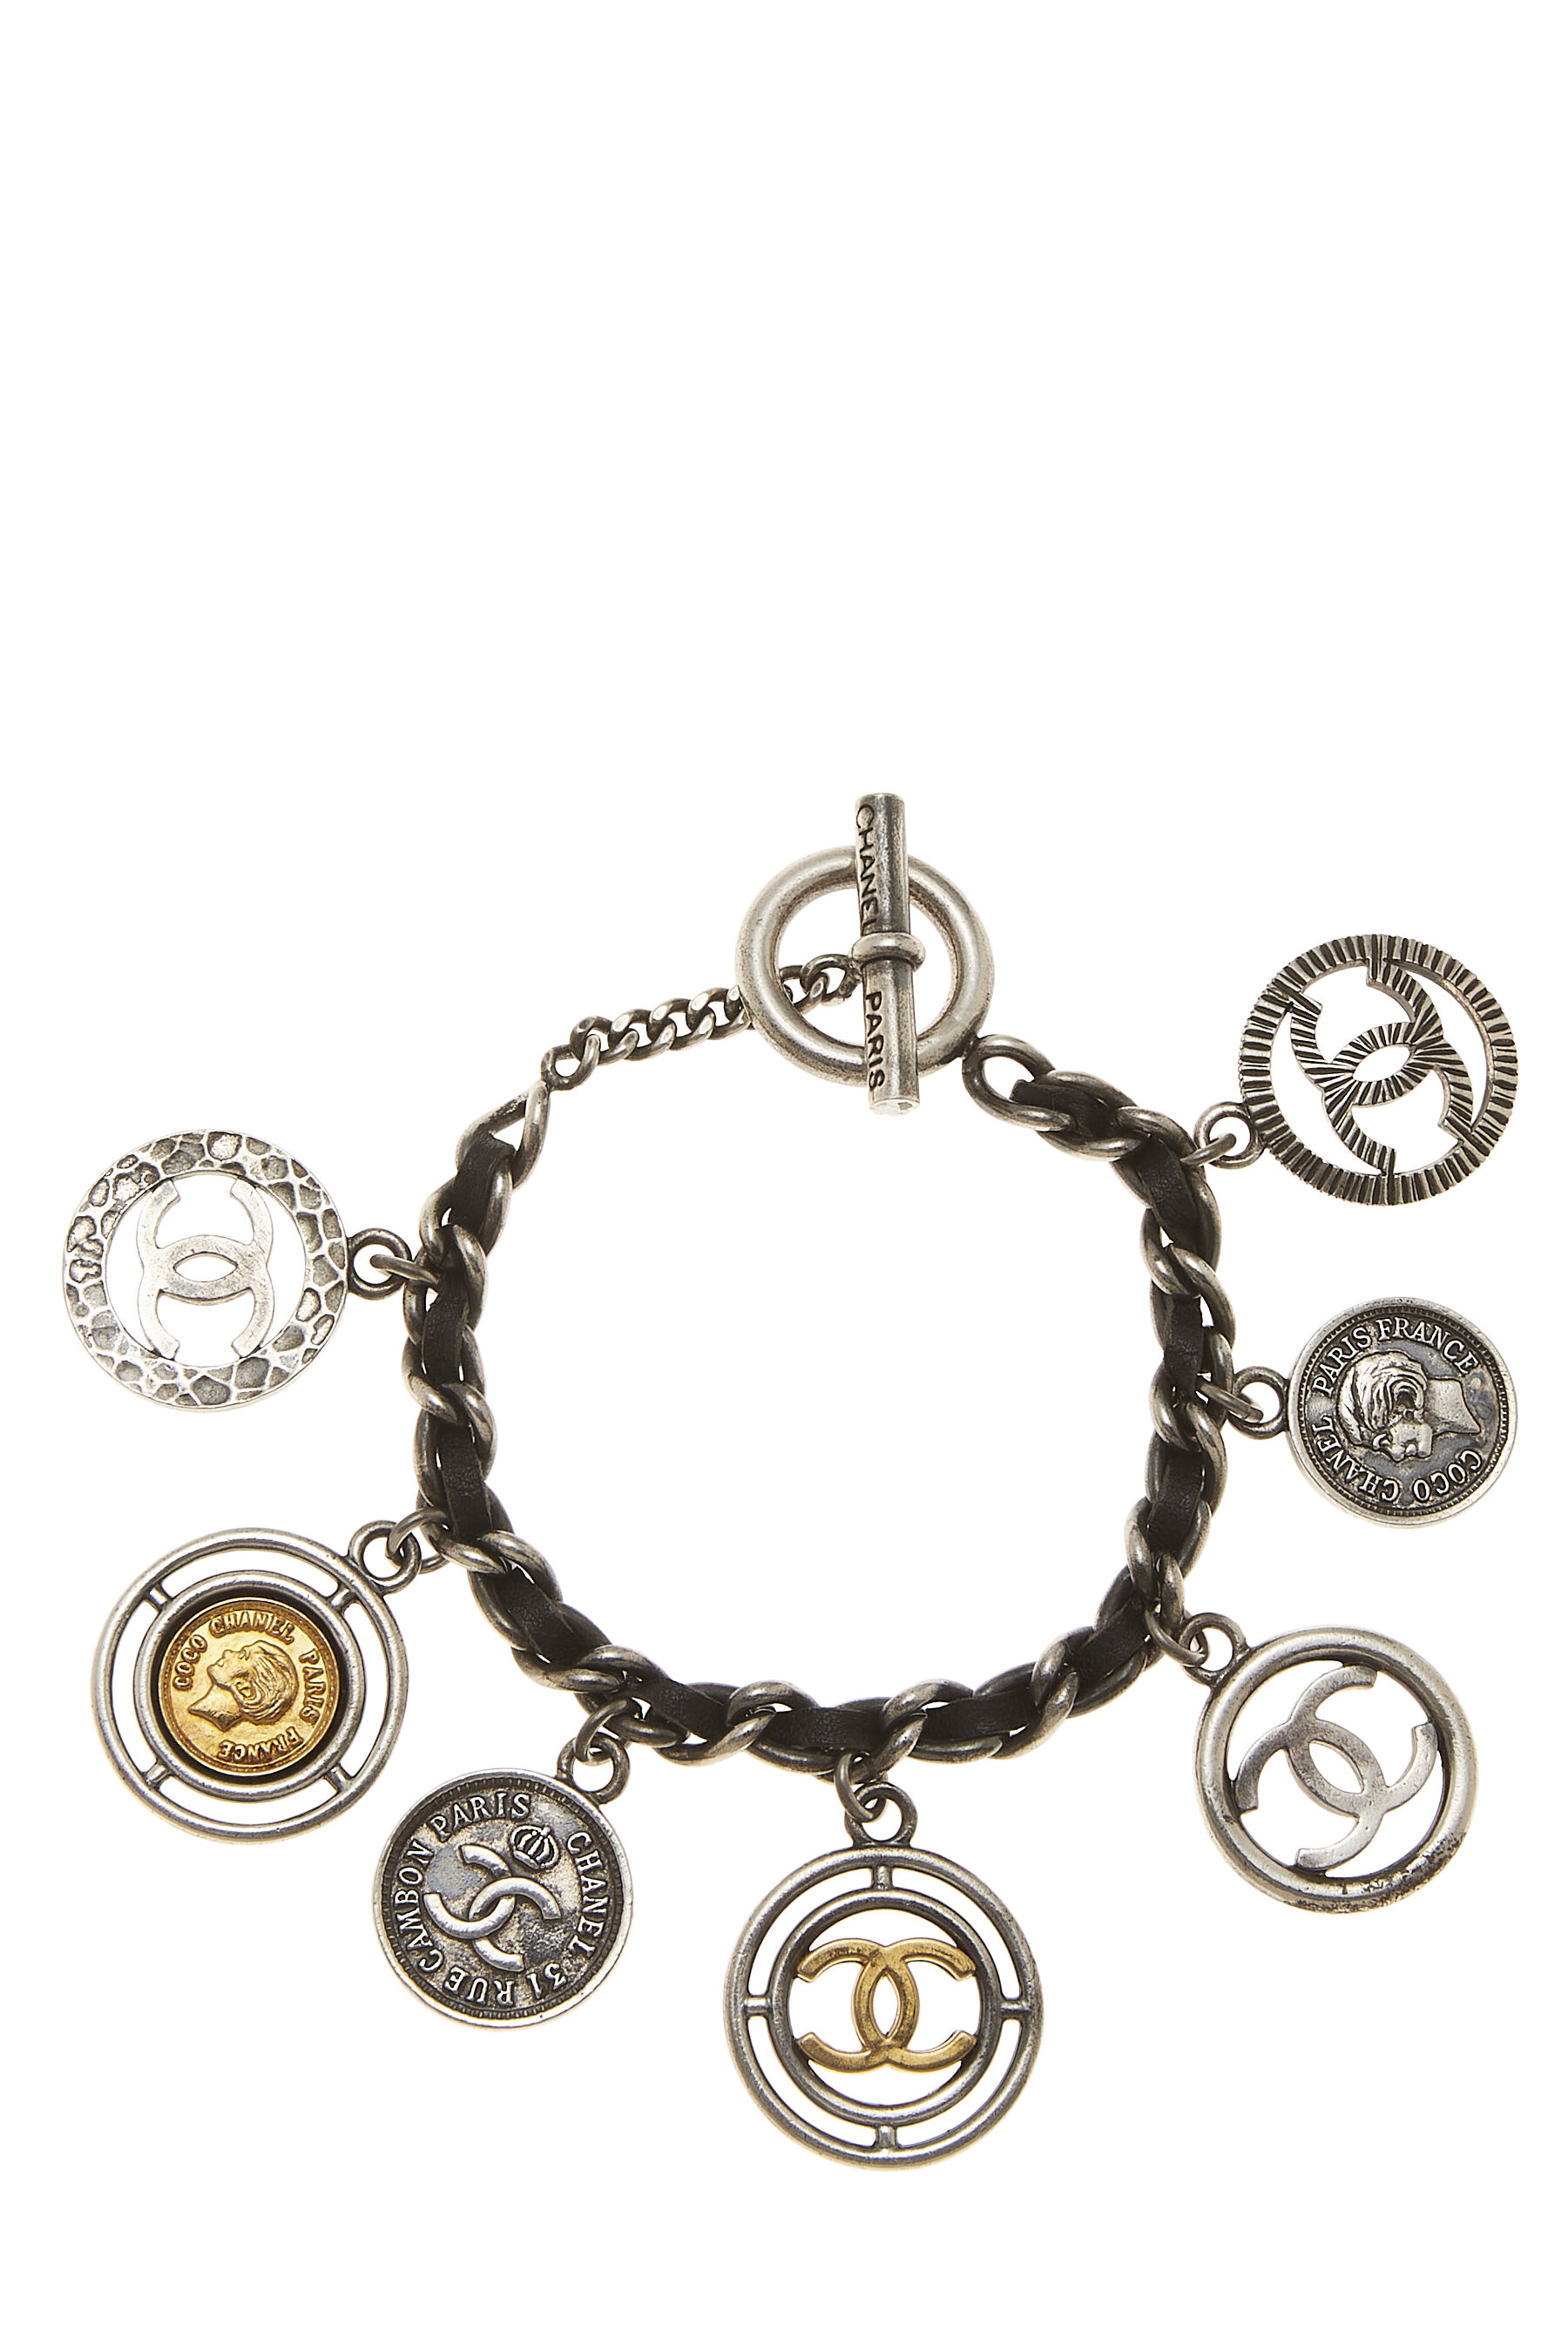 Chanel - Gold & Black Leather Charm Bracelet